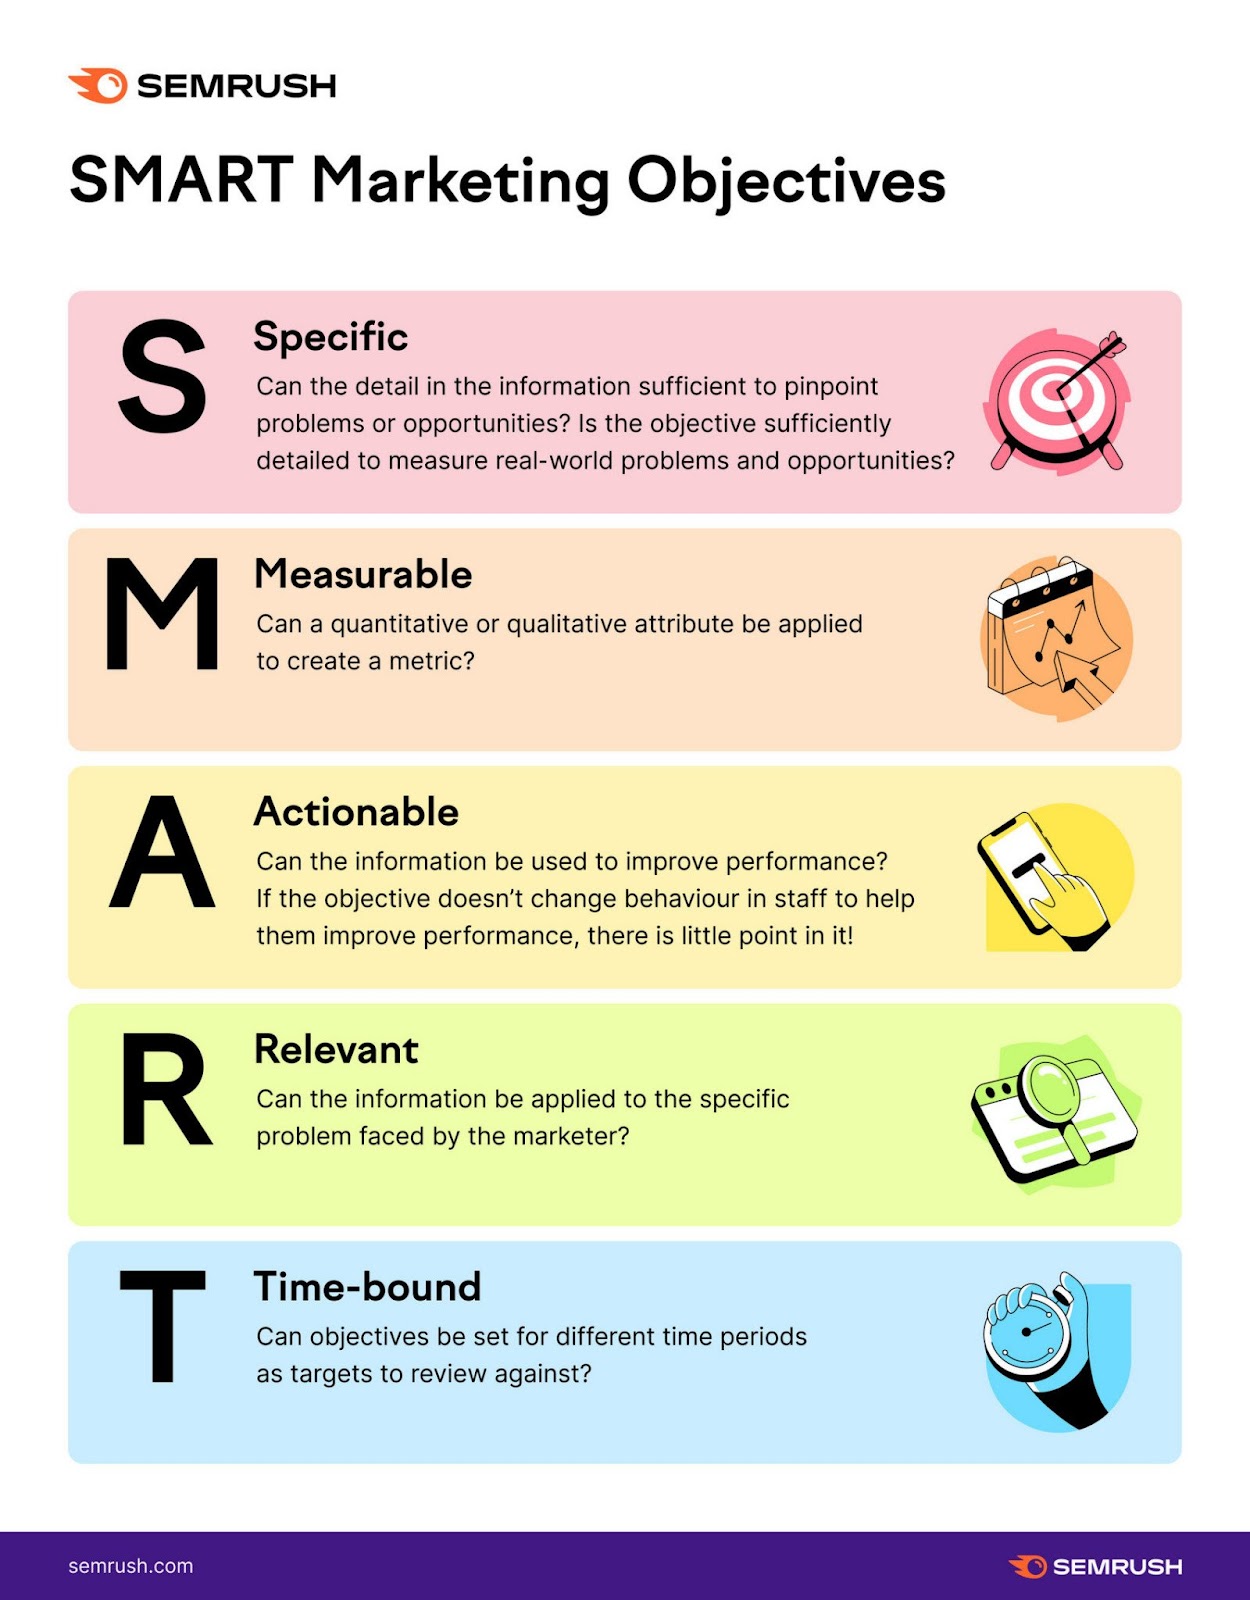 SMART Marketing Objectives Framework